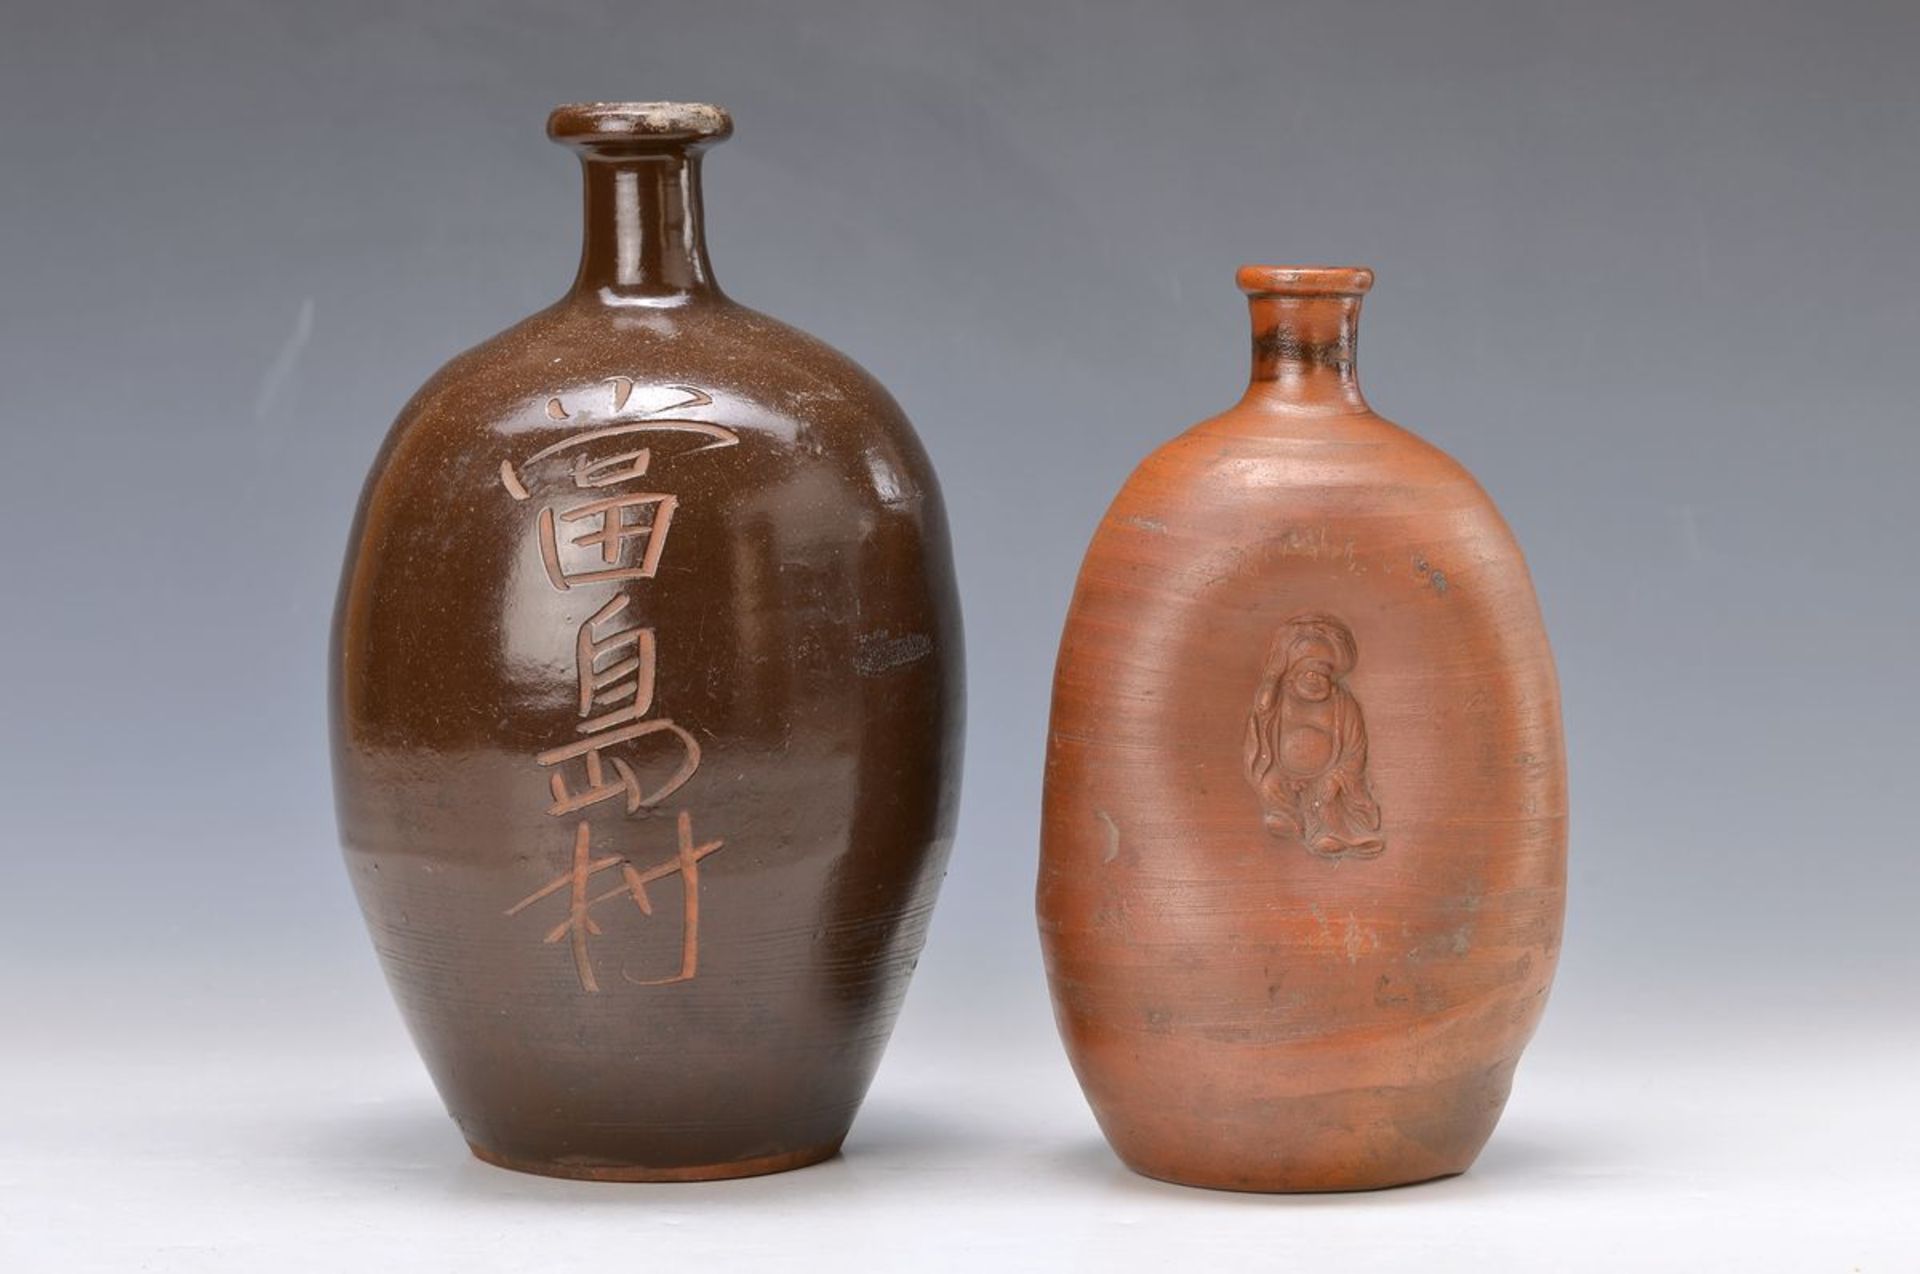 2 Sakeflaschen, Japan, stoneware, one with Hotei-decor, around 1900 and one of 20th c., Temucu-